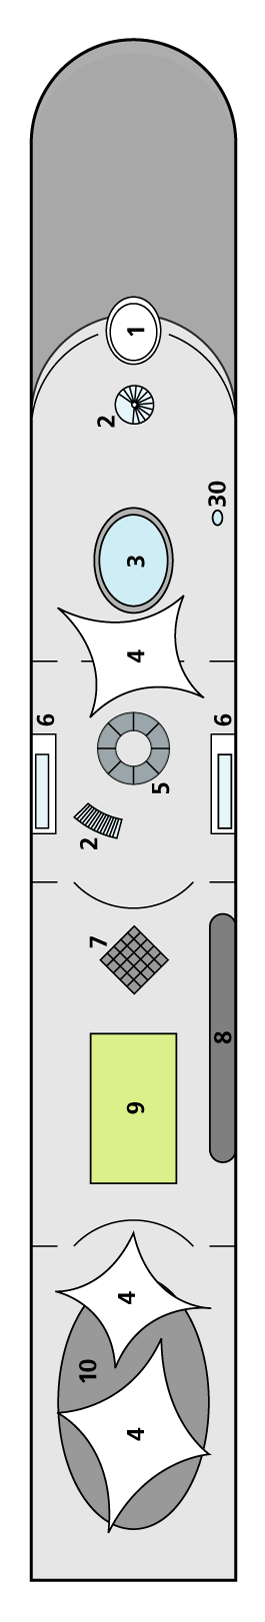 Схема палубы